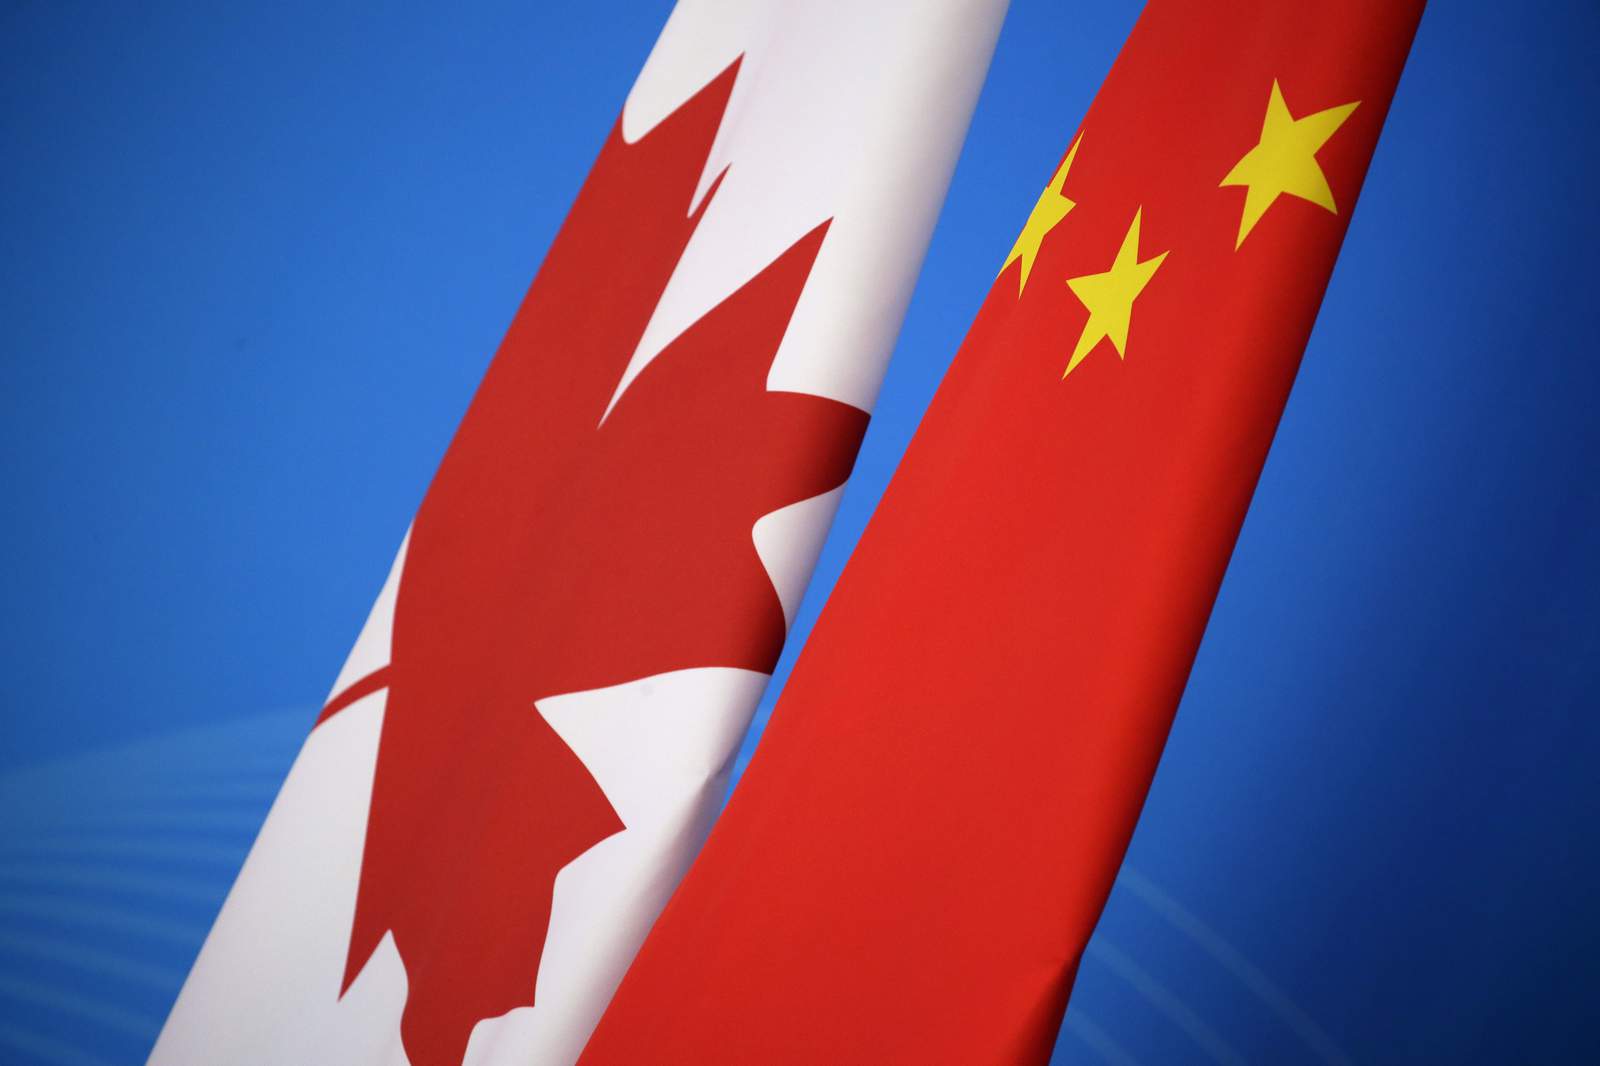 Wu-Tang Clan or Wuhan? T-shirt ignites new China-Canada tiff